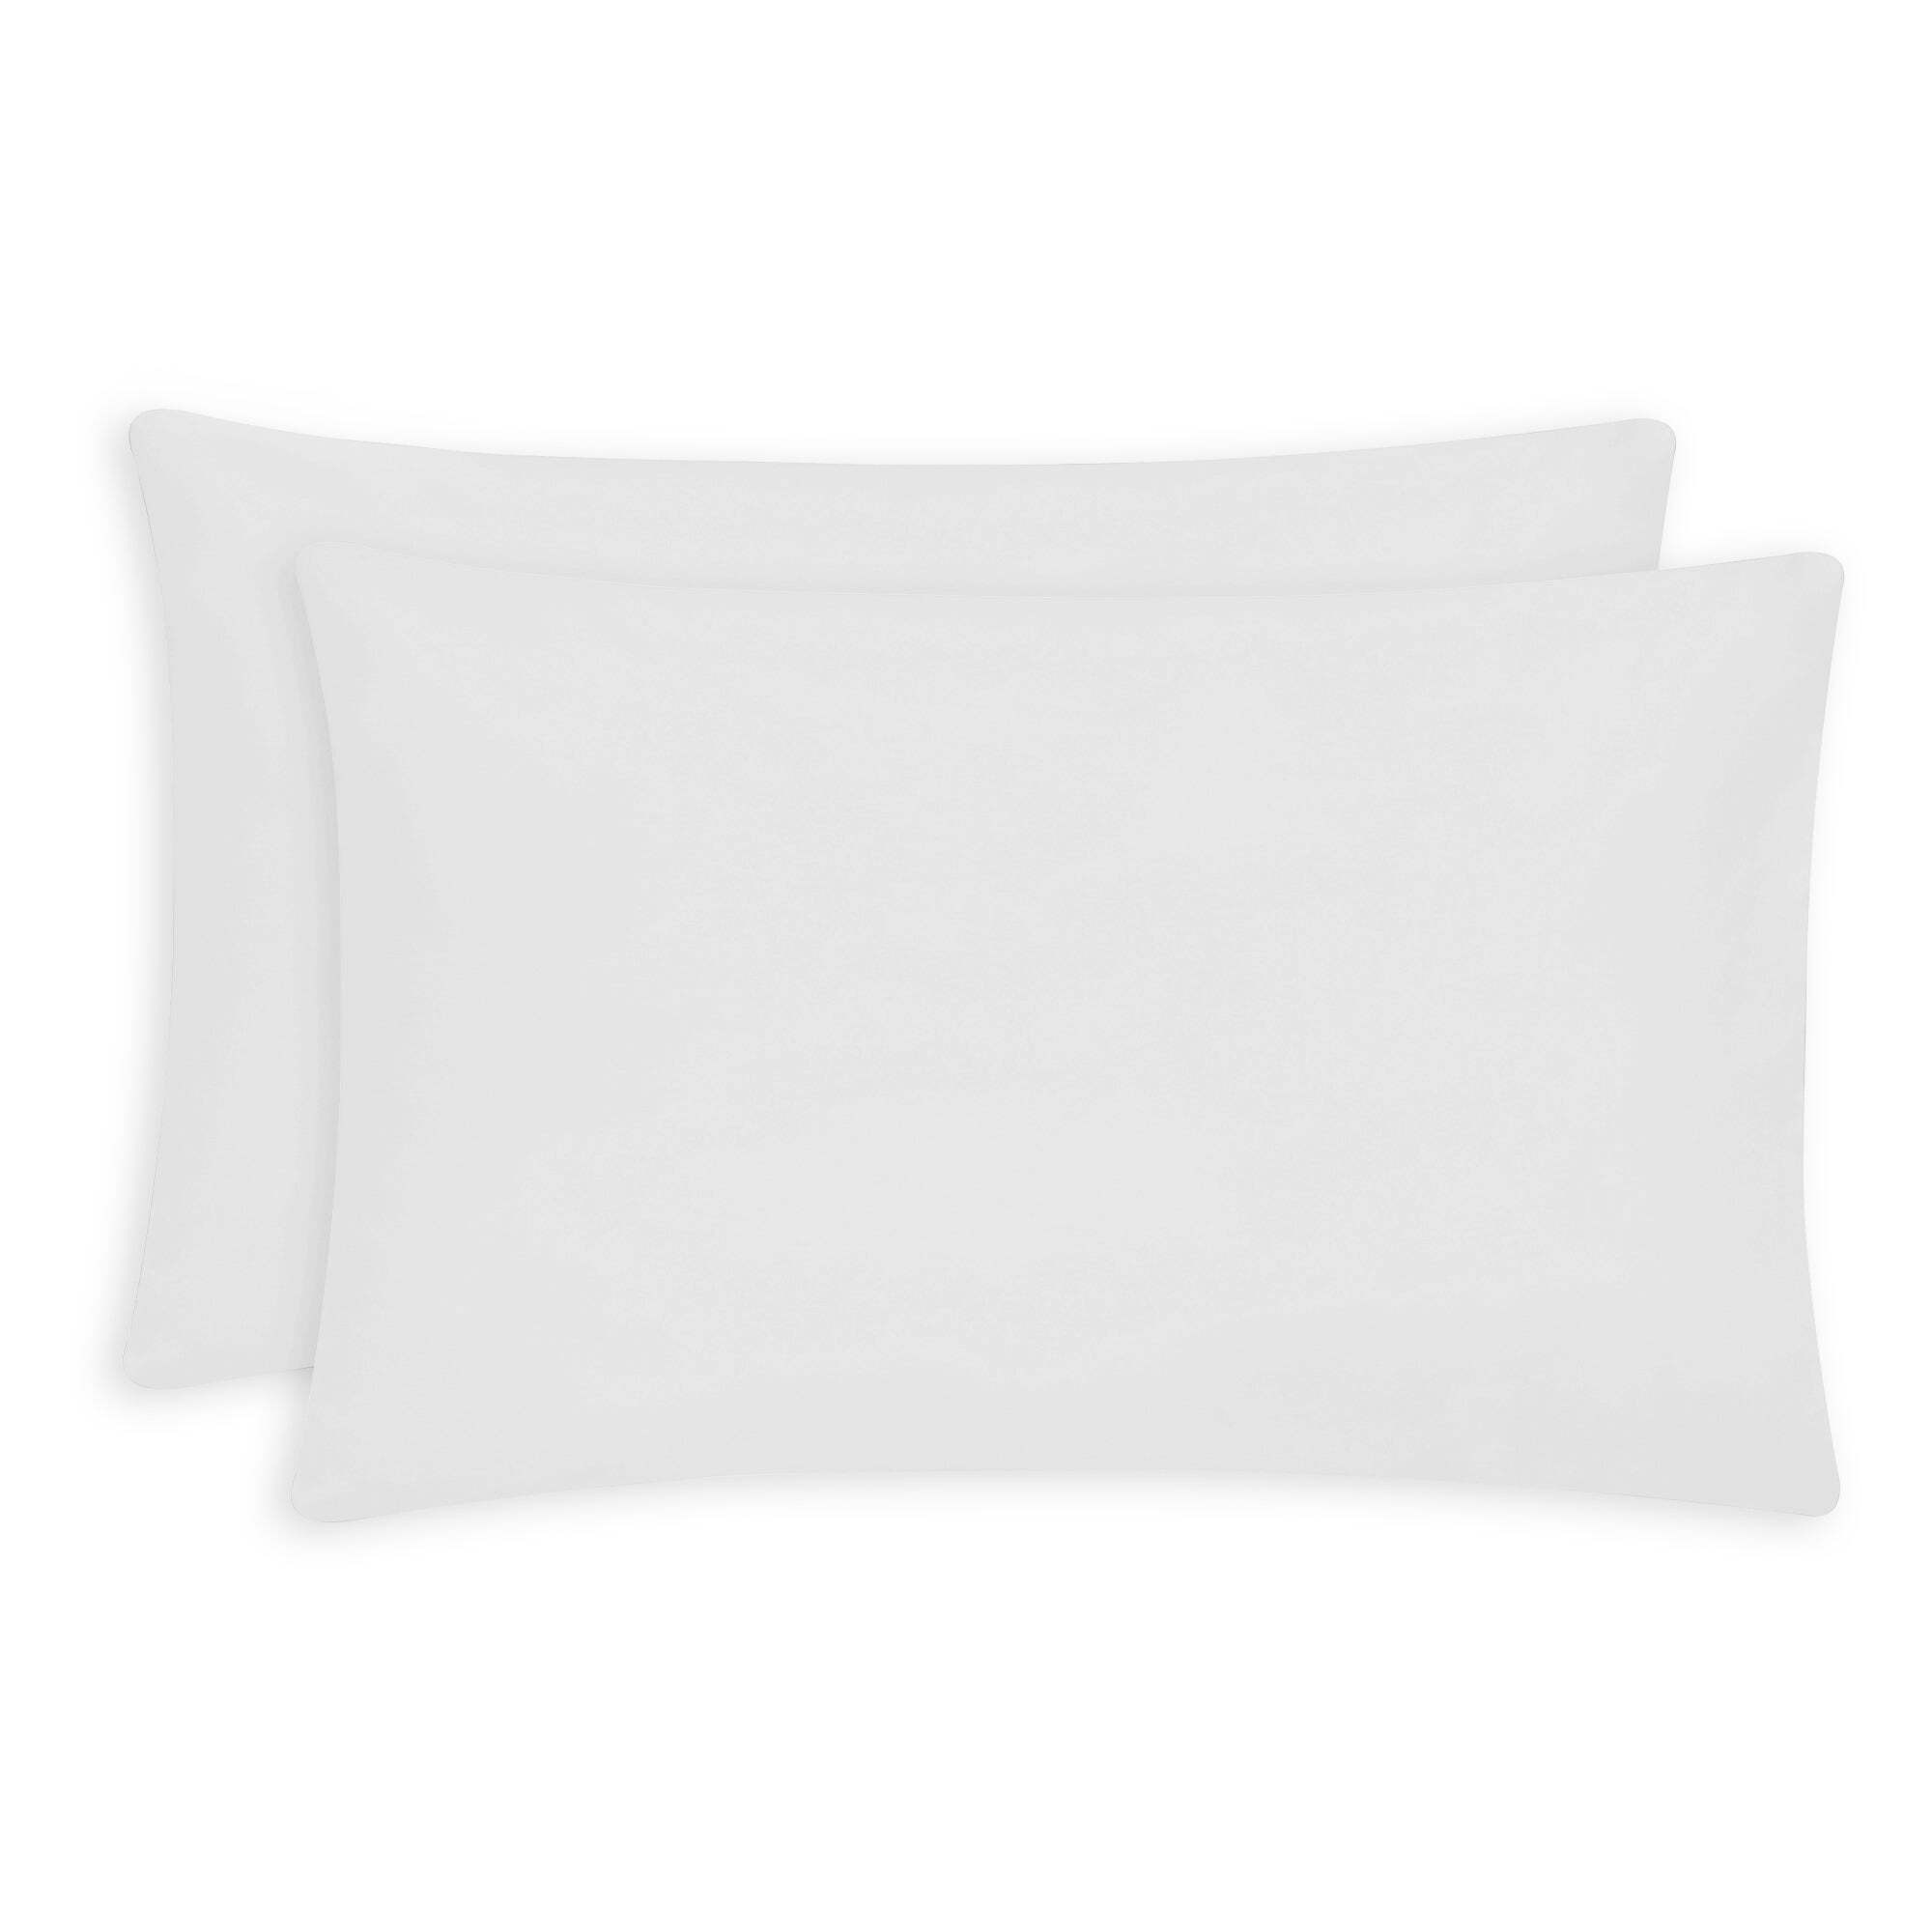 Super Soft Microfibre Plain Standard Pillowcase Pair White